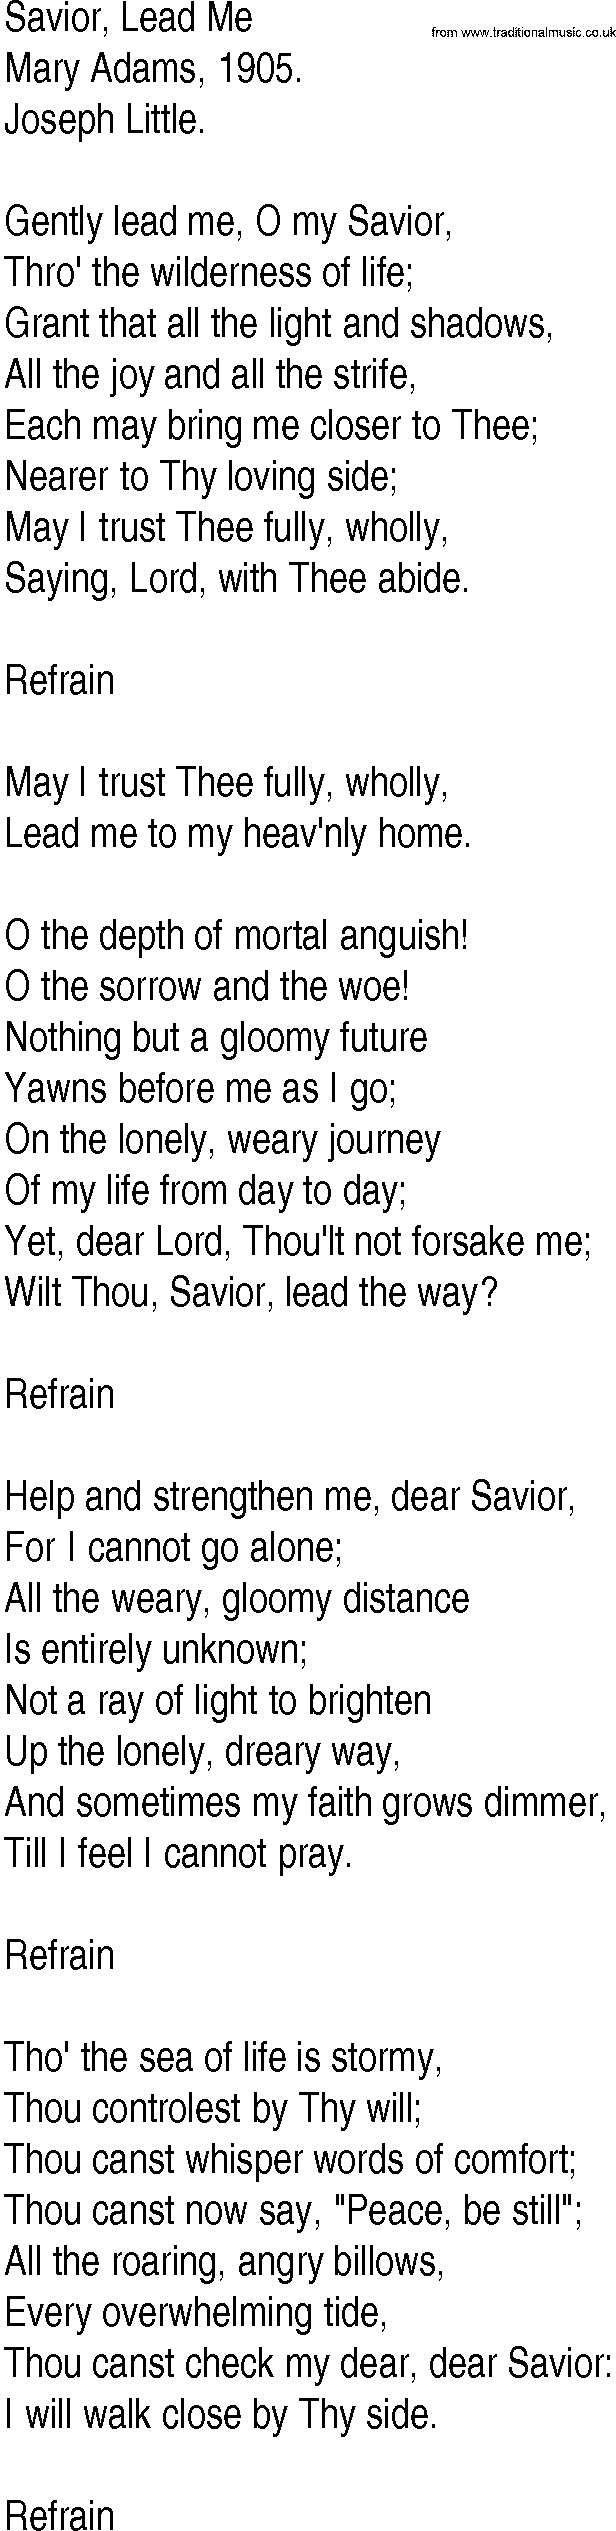 Hymn and Gospel Song: Savior, Lead Me by Mary Adams lyrics